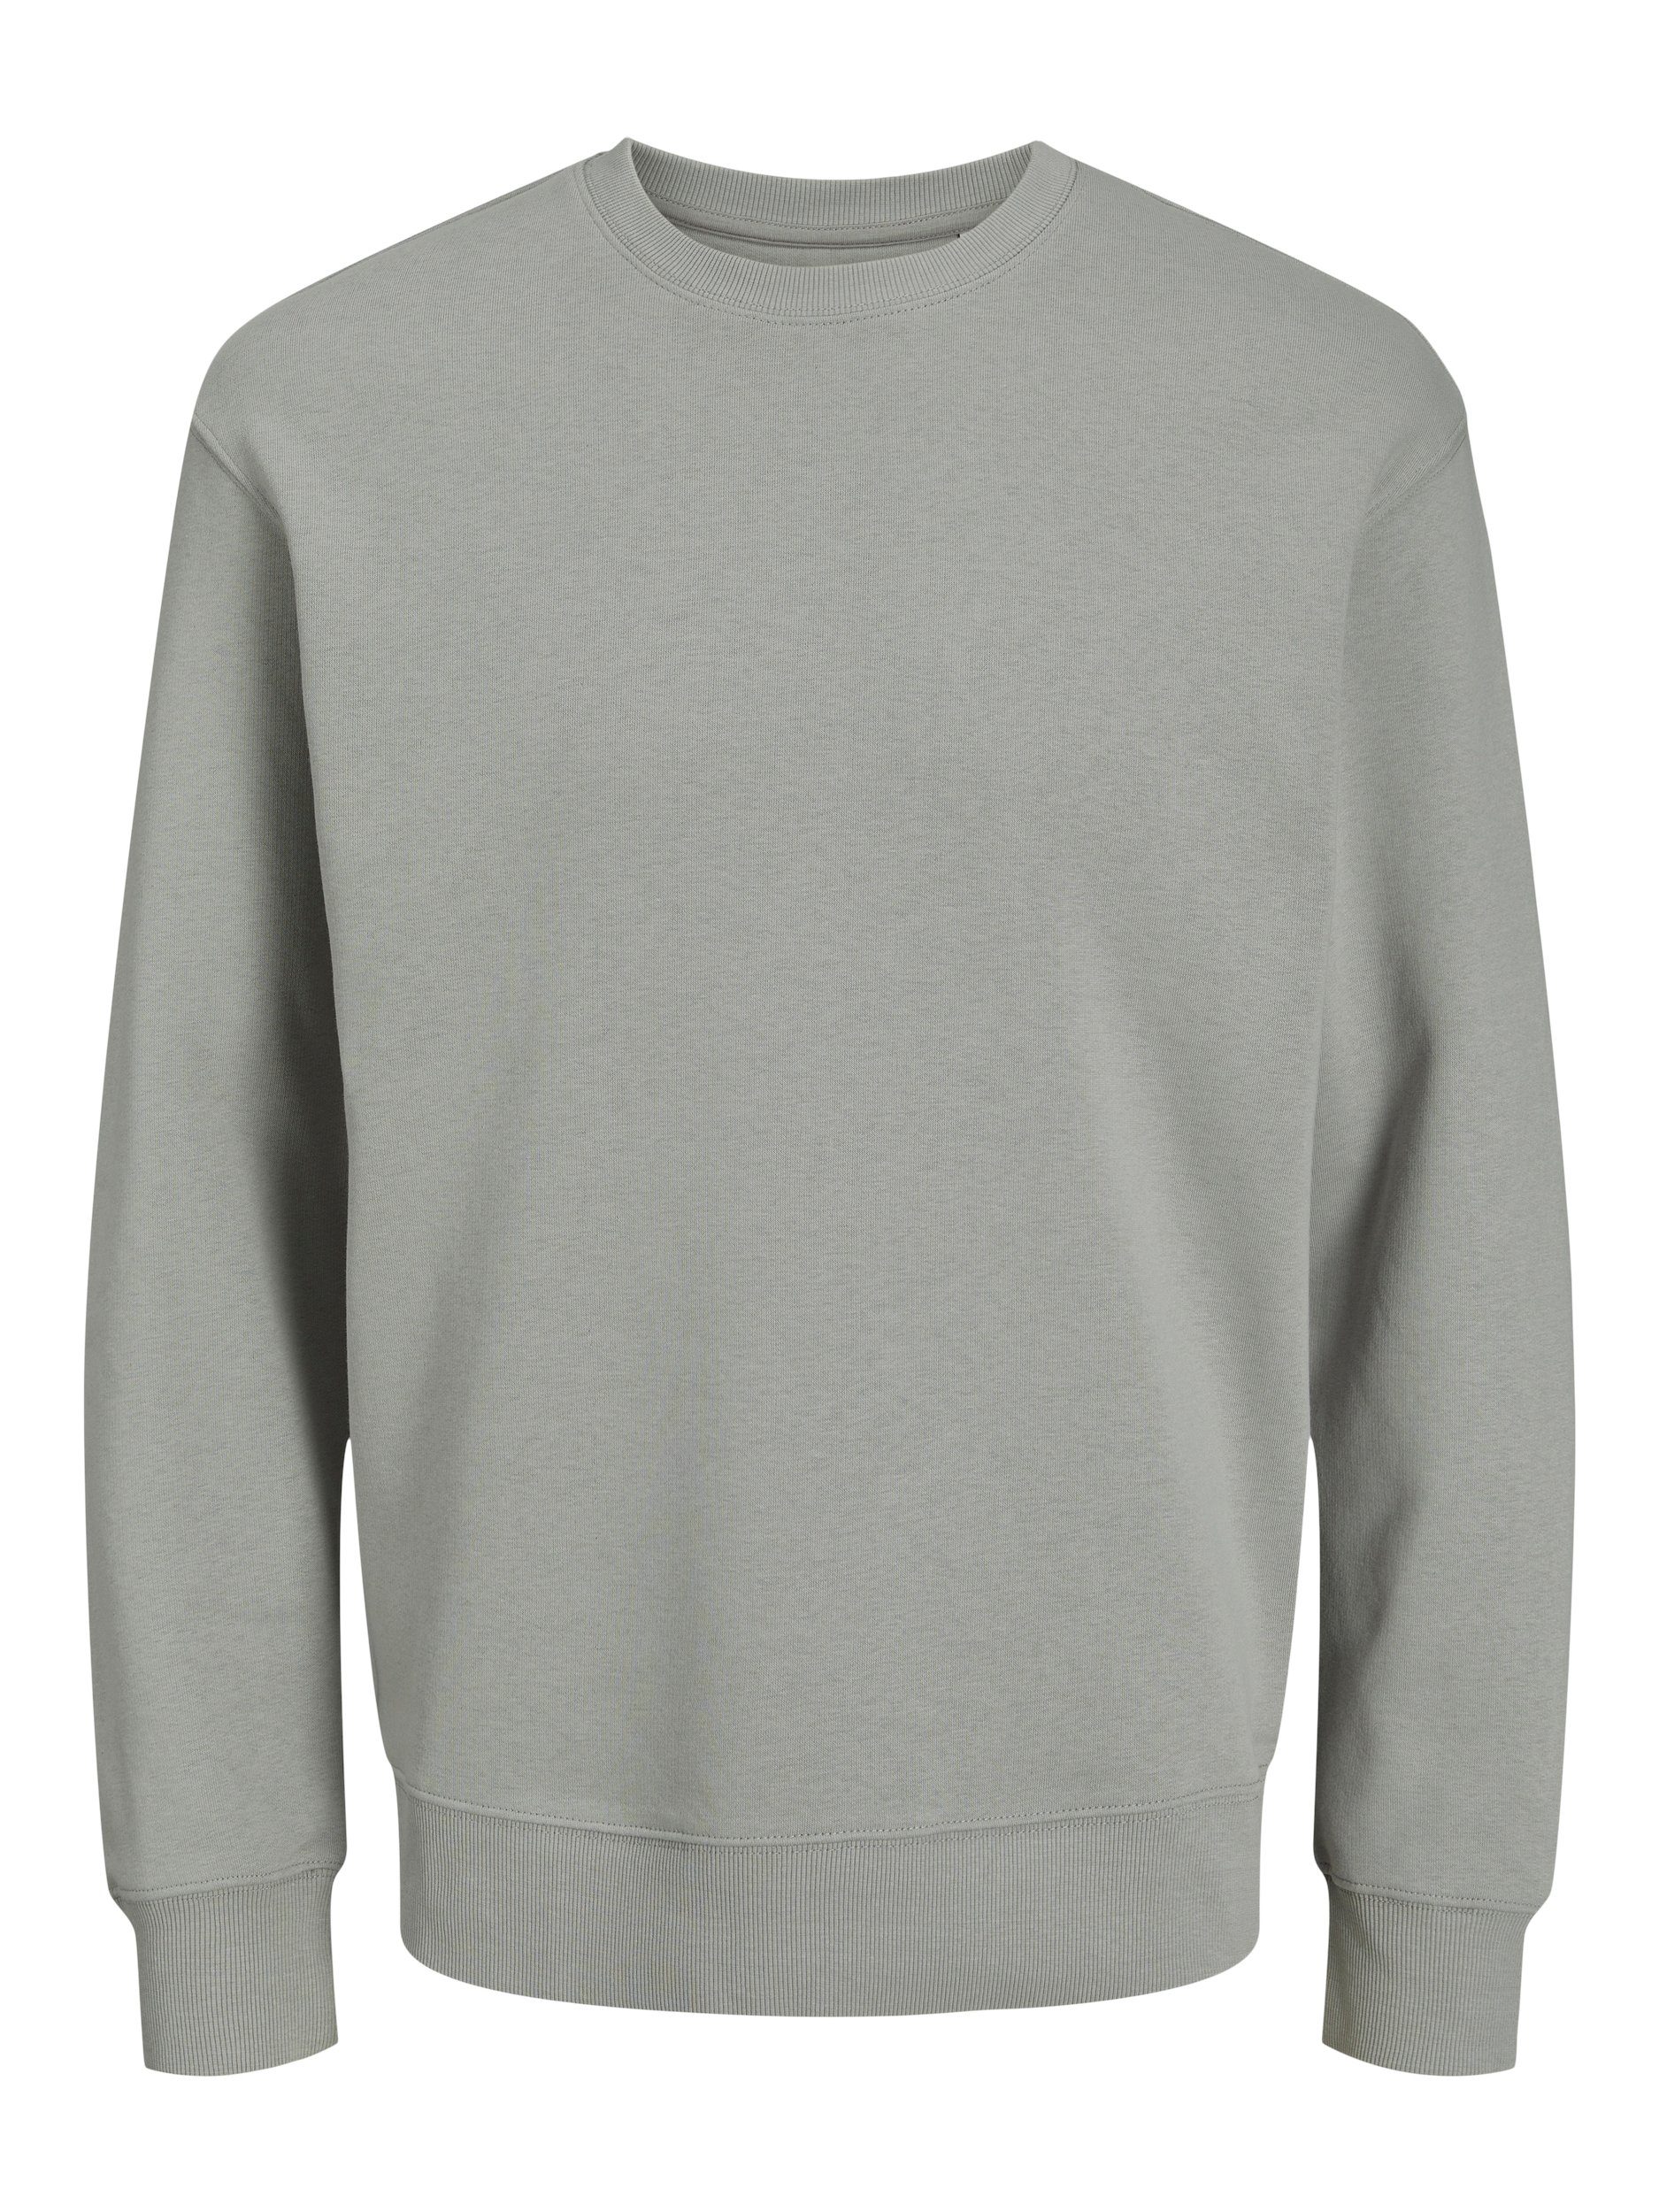 NOOS Sweatshirt Jones ultimate SWEAT grey NECK Jack & BASIC CREW JJESTAR